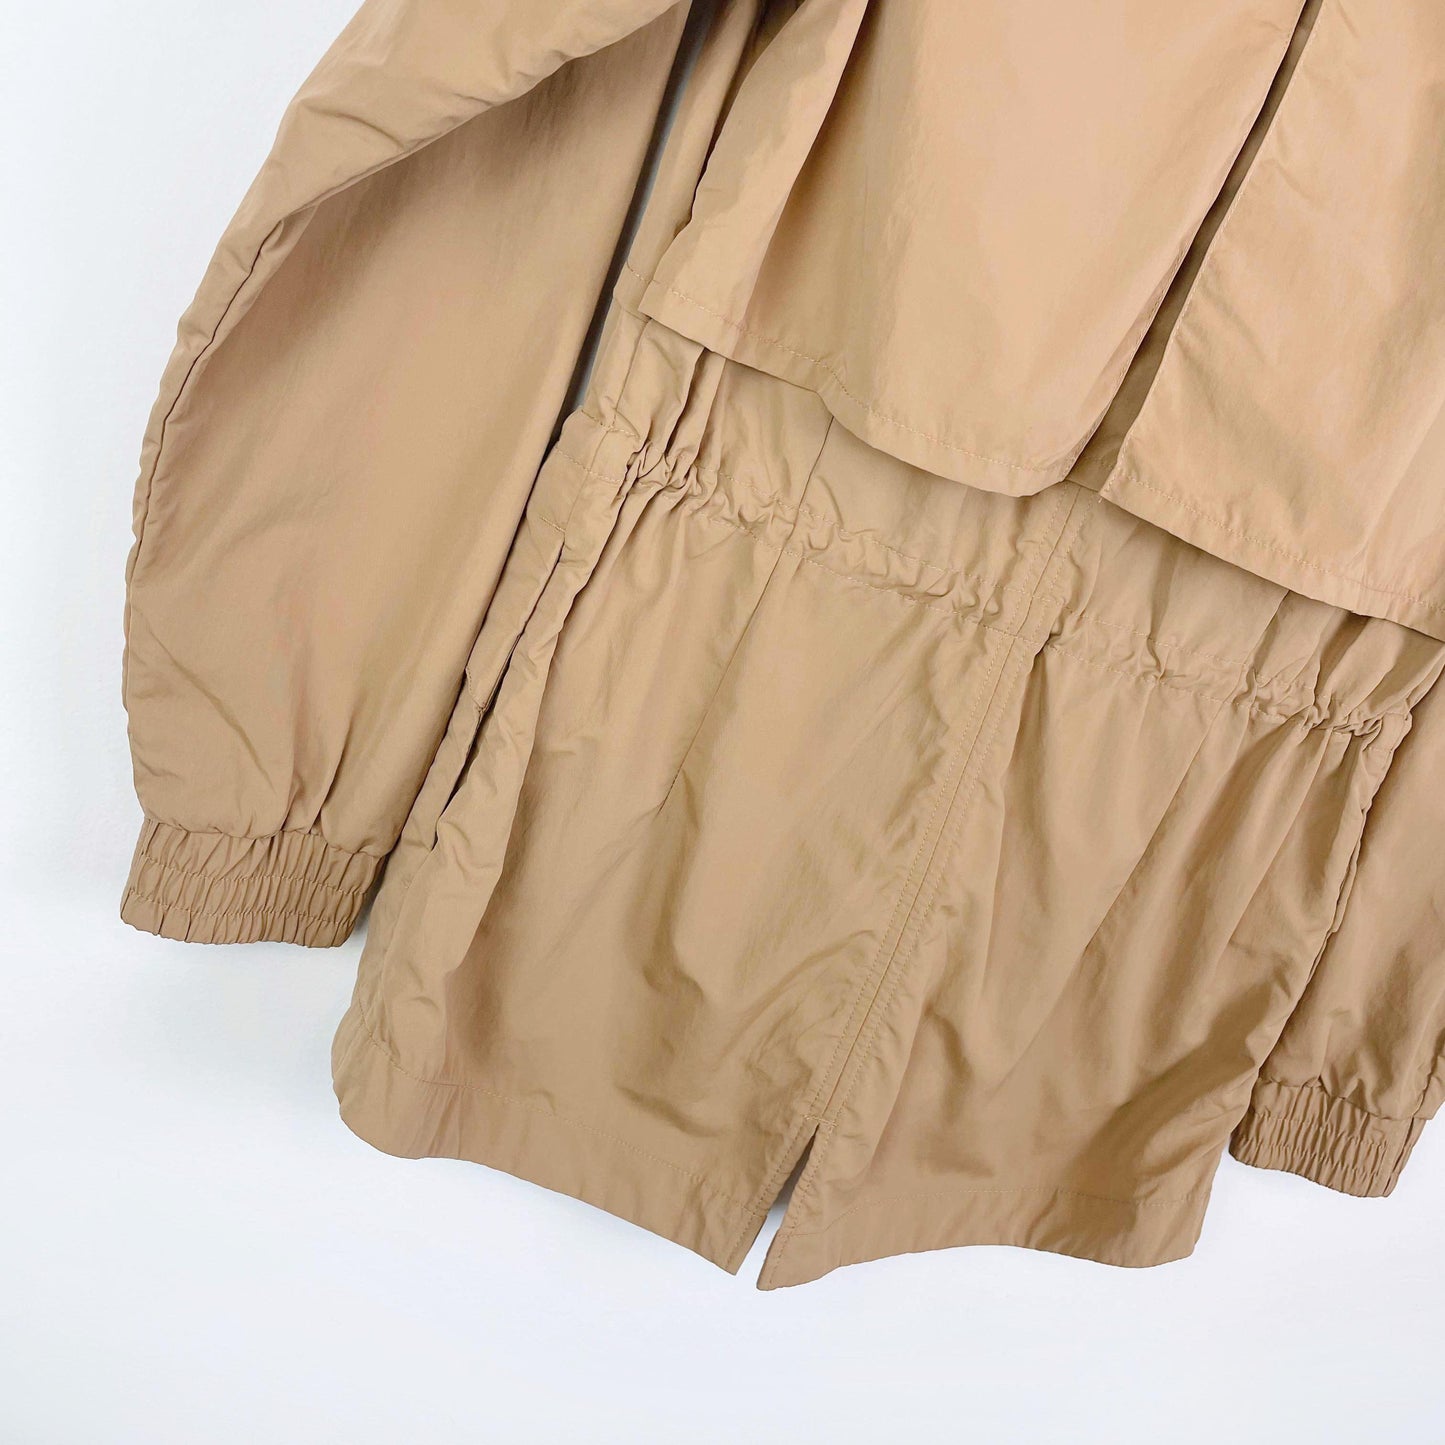 columbia tan day trippin light jacket - size medium